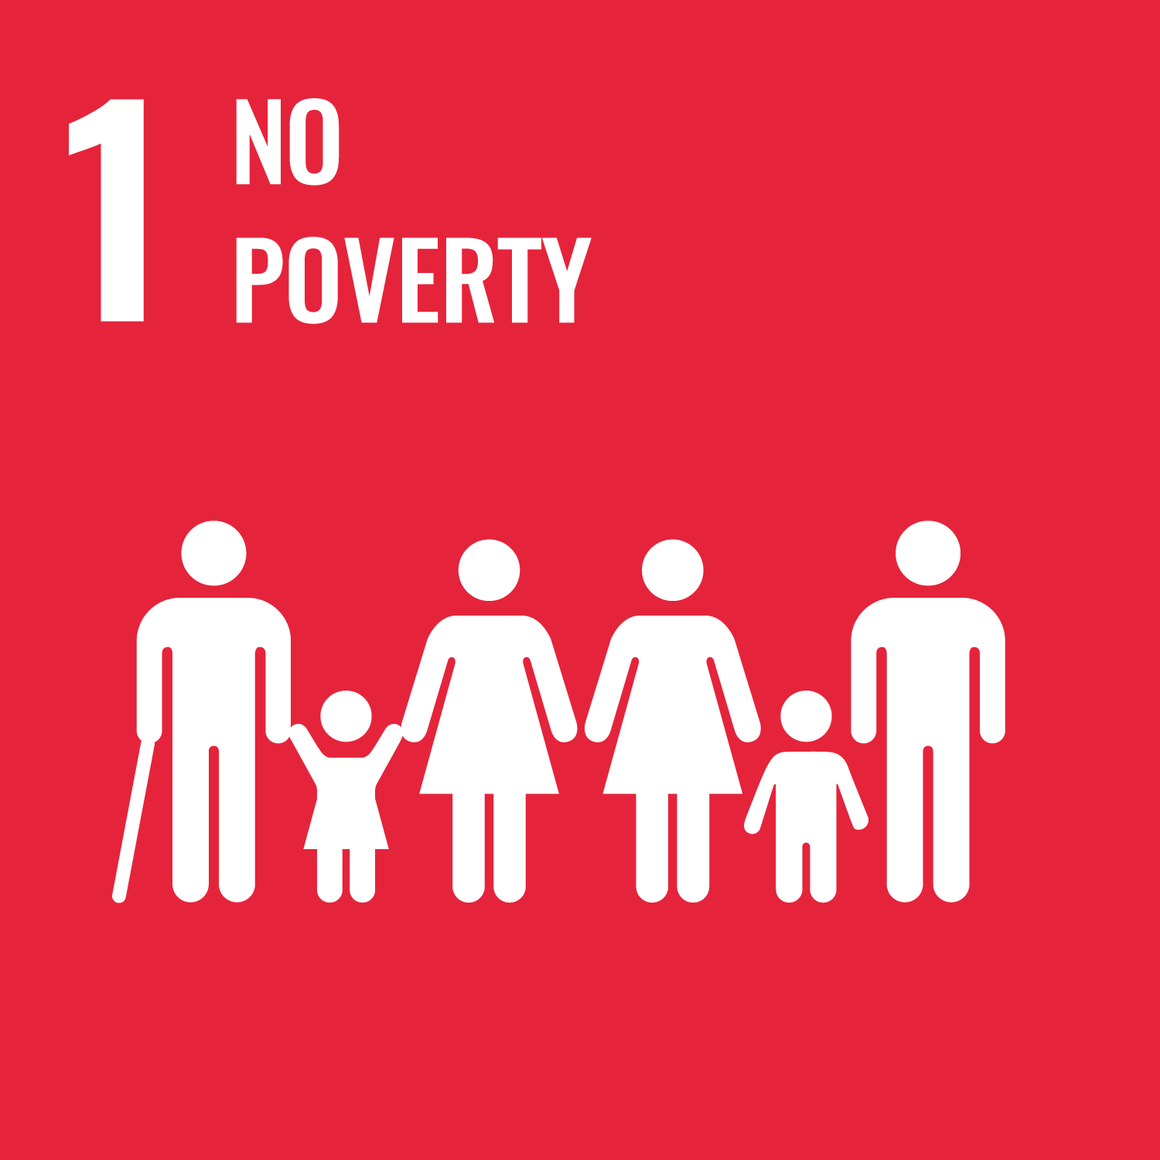  Sustainable Development Goal 1:No Poverty